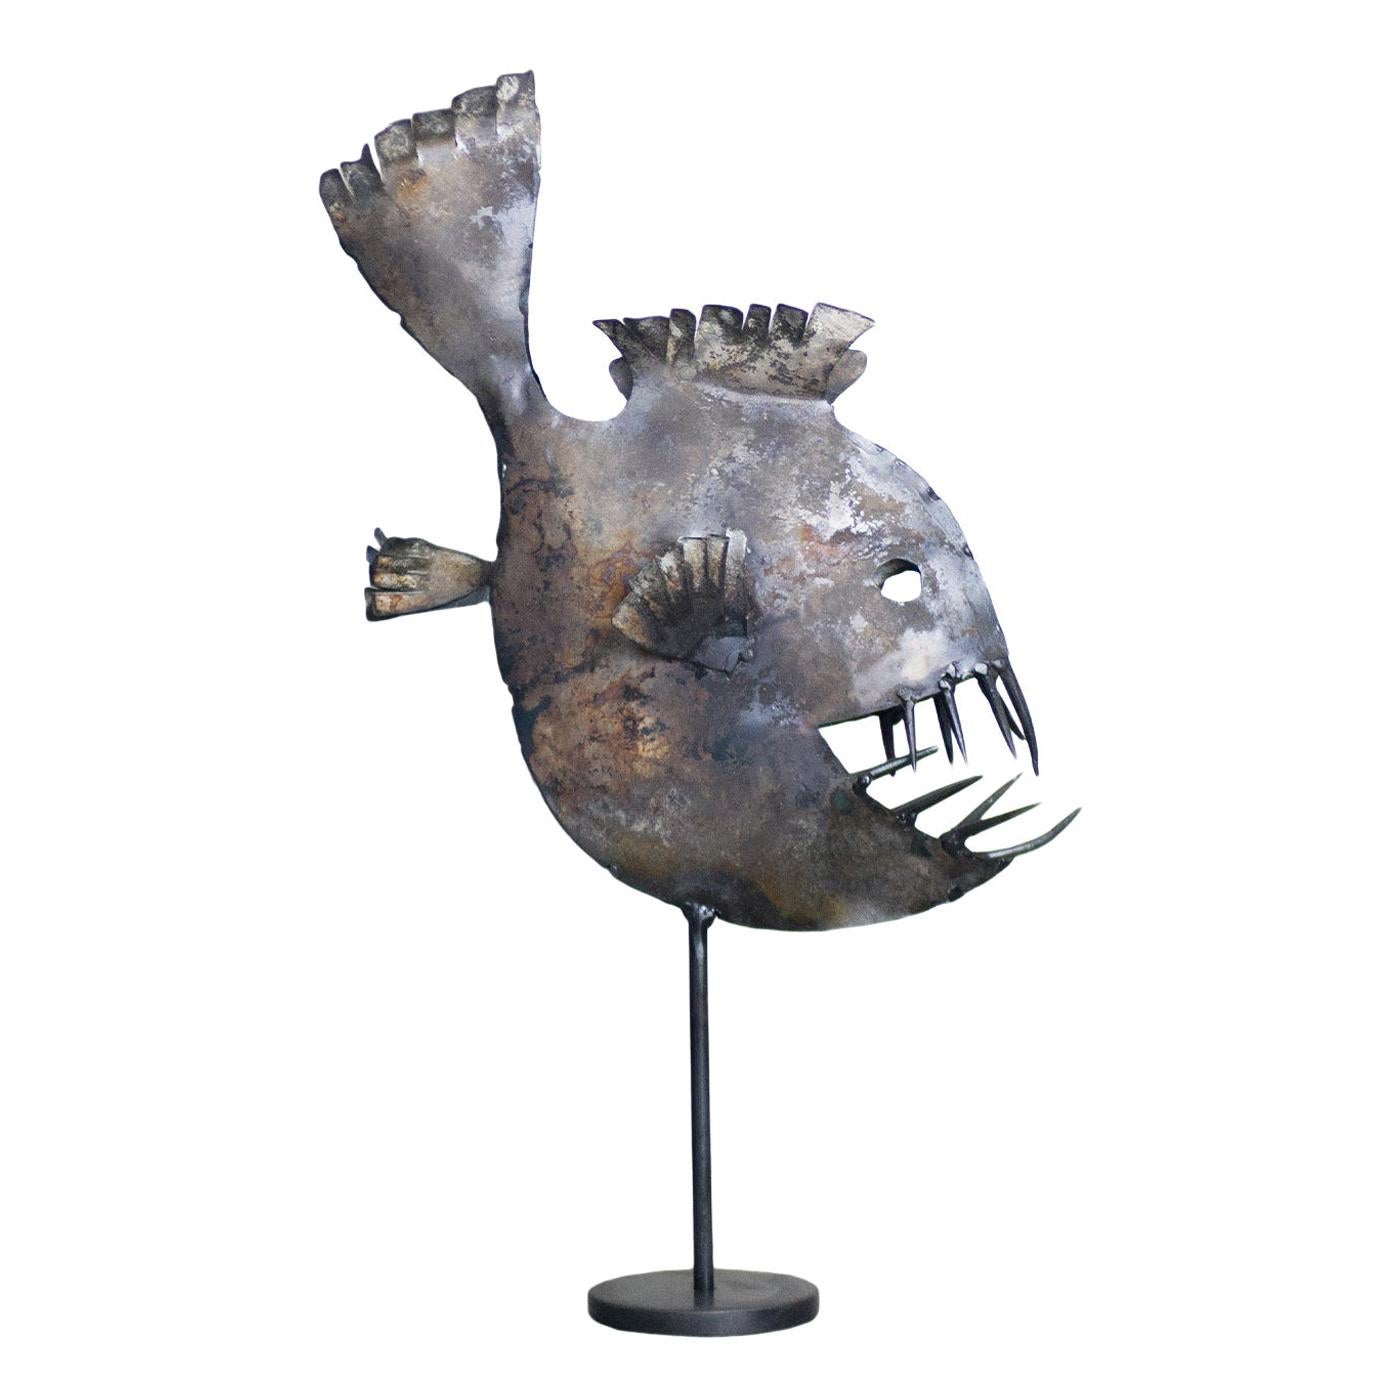 Piranha Sculpture